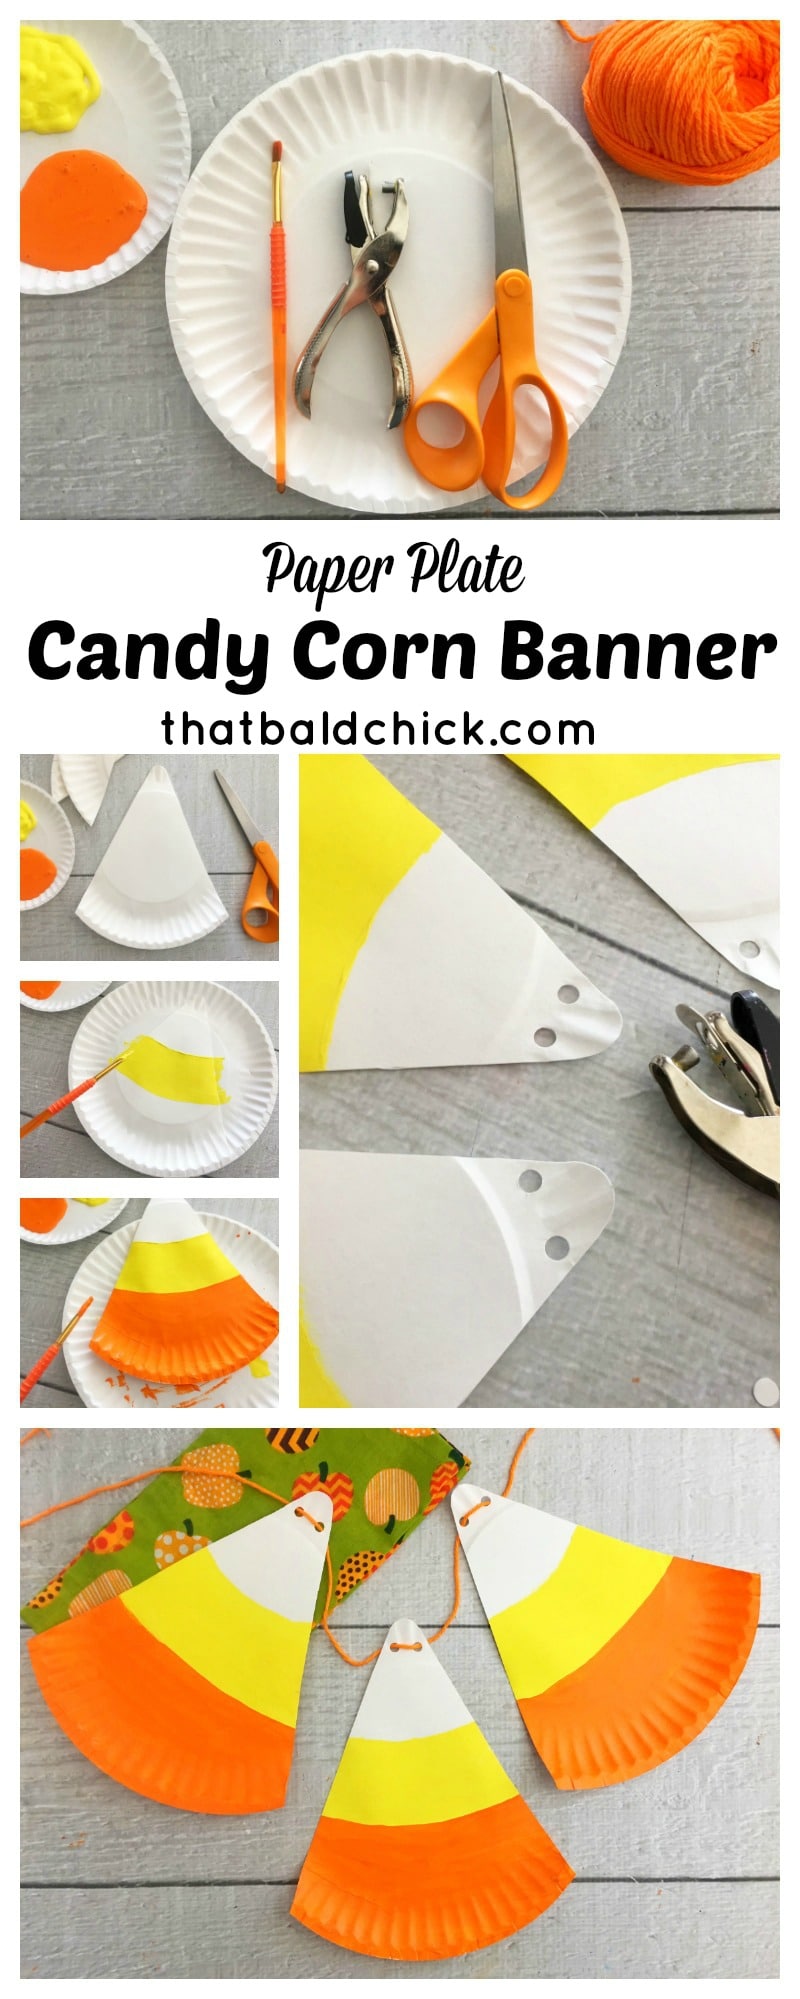 Paper plate candy corn banner at thatbaldchick.com